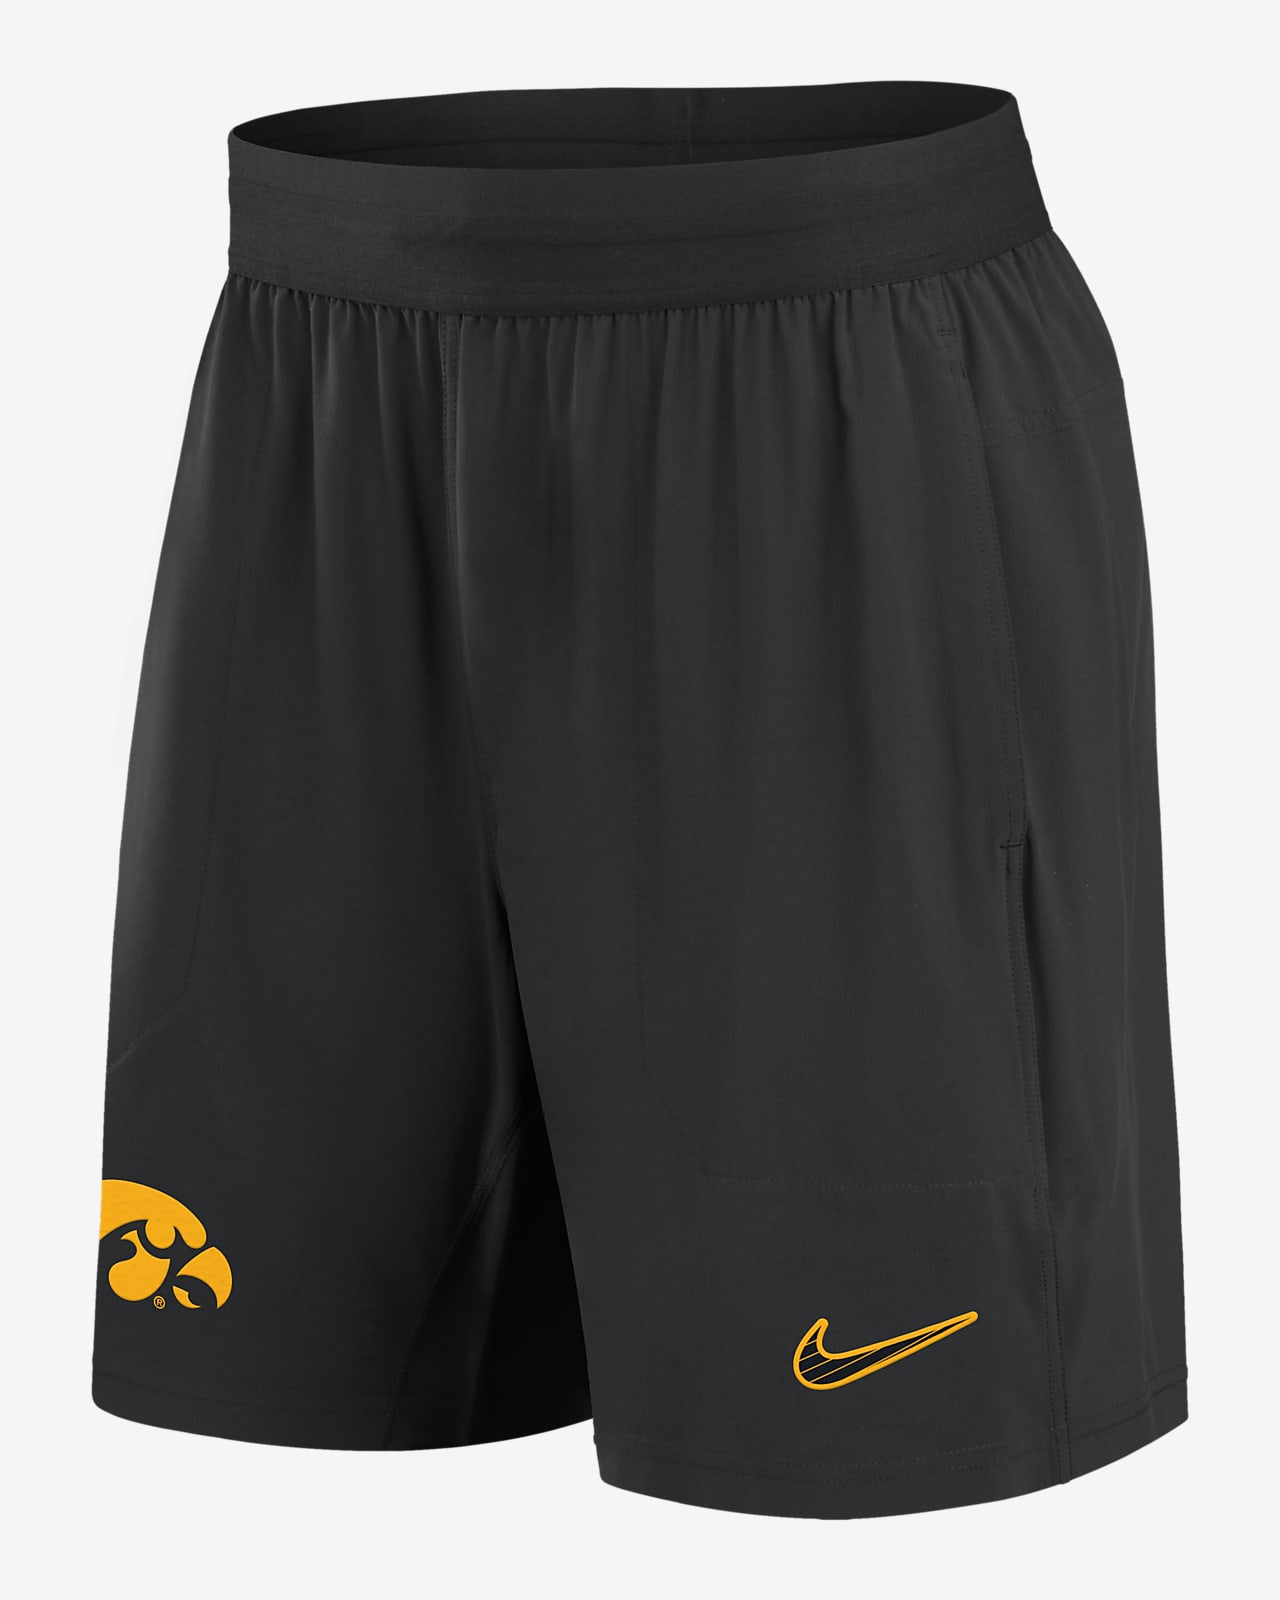 Shorts universitarios Nike Dri-FIT para hombre Iowa Hawkeyes Sideline